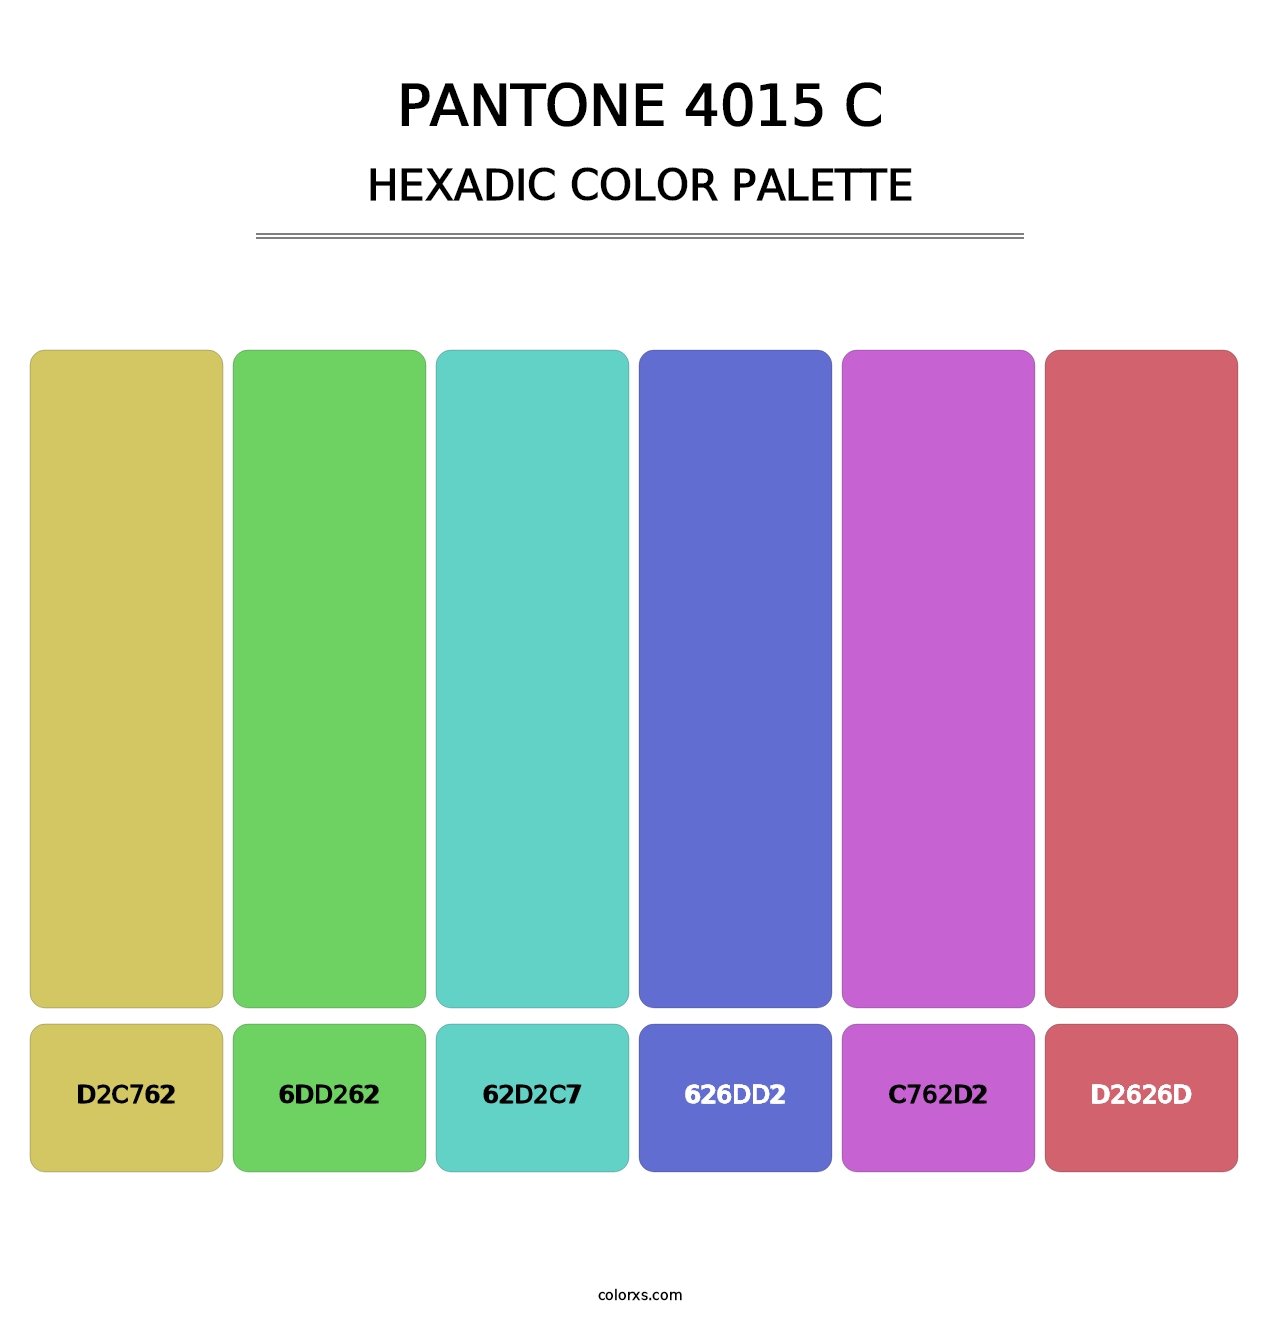 PANTONE 4015 C - Hexadic Color Palette